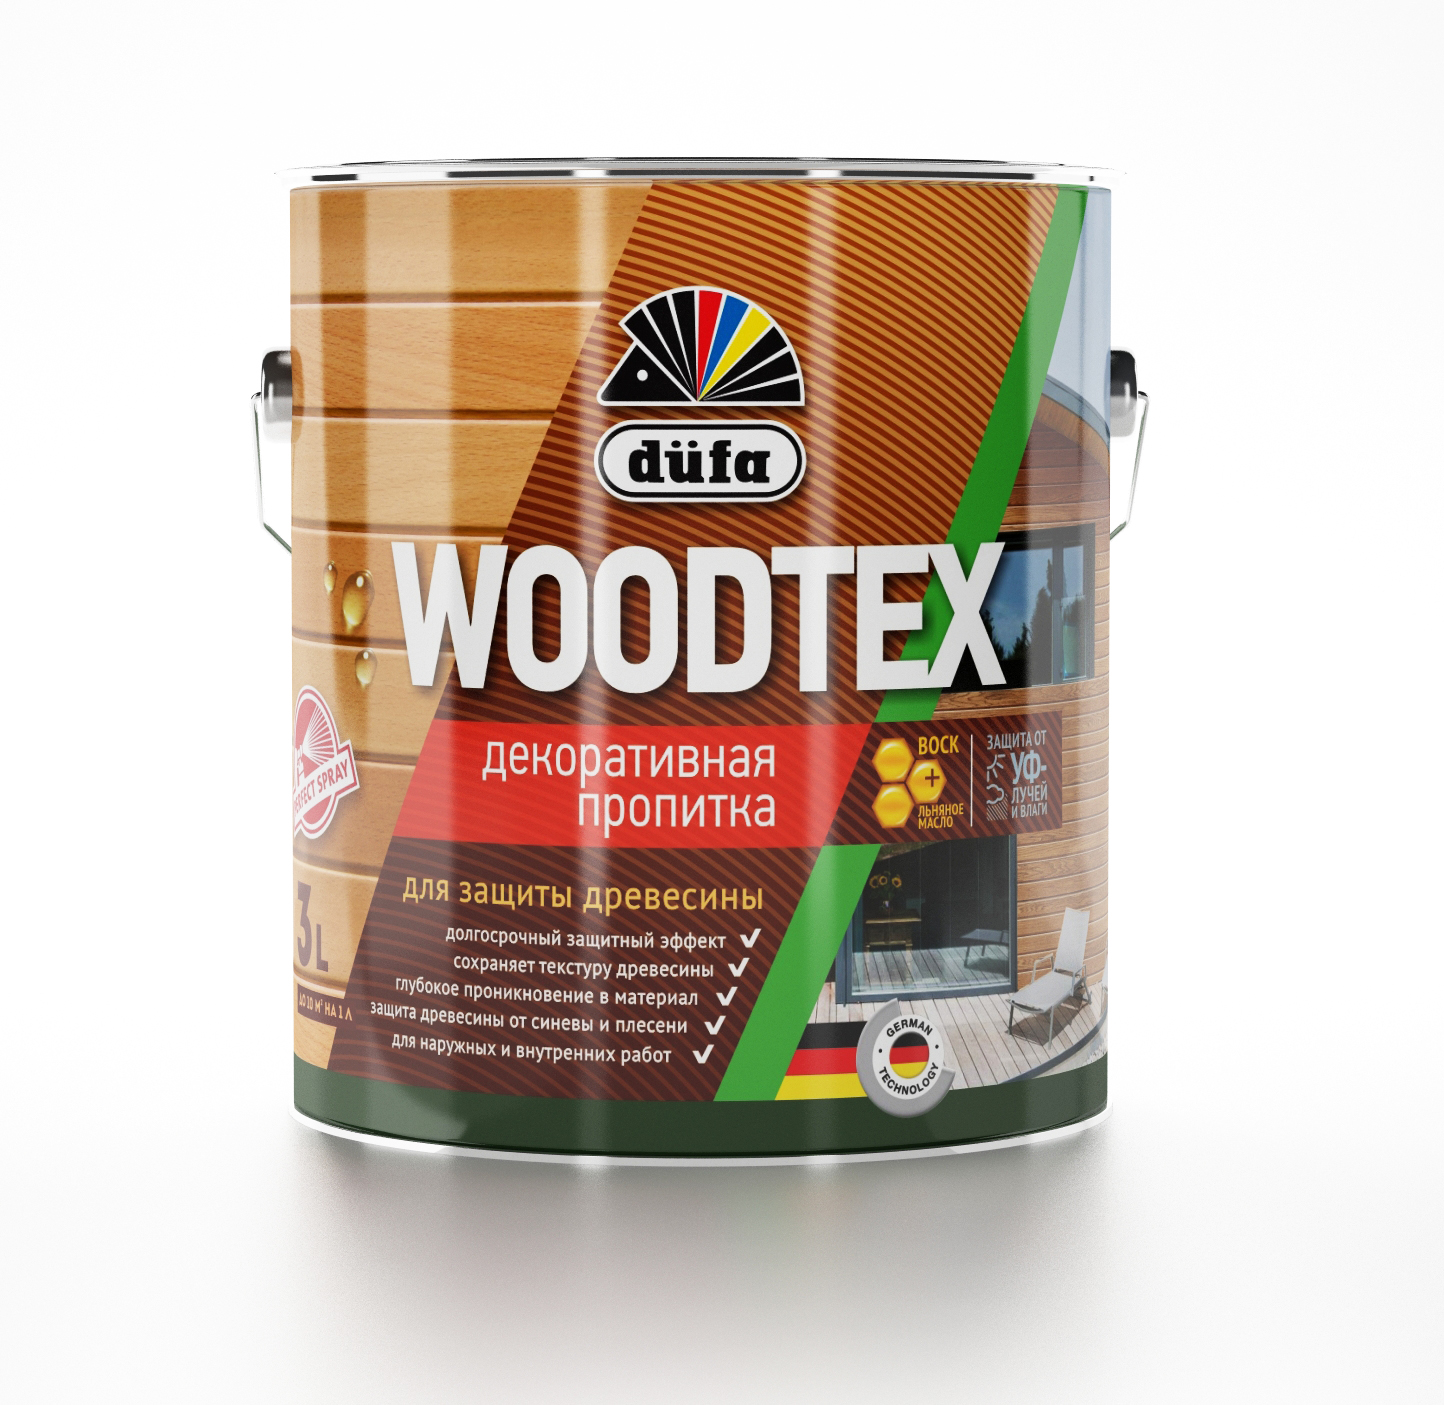 Пропитка для дерева Dufa Wood Tex серая, 3 л